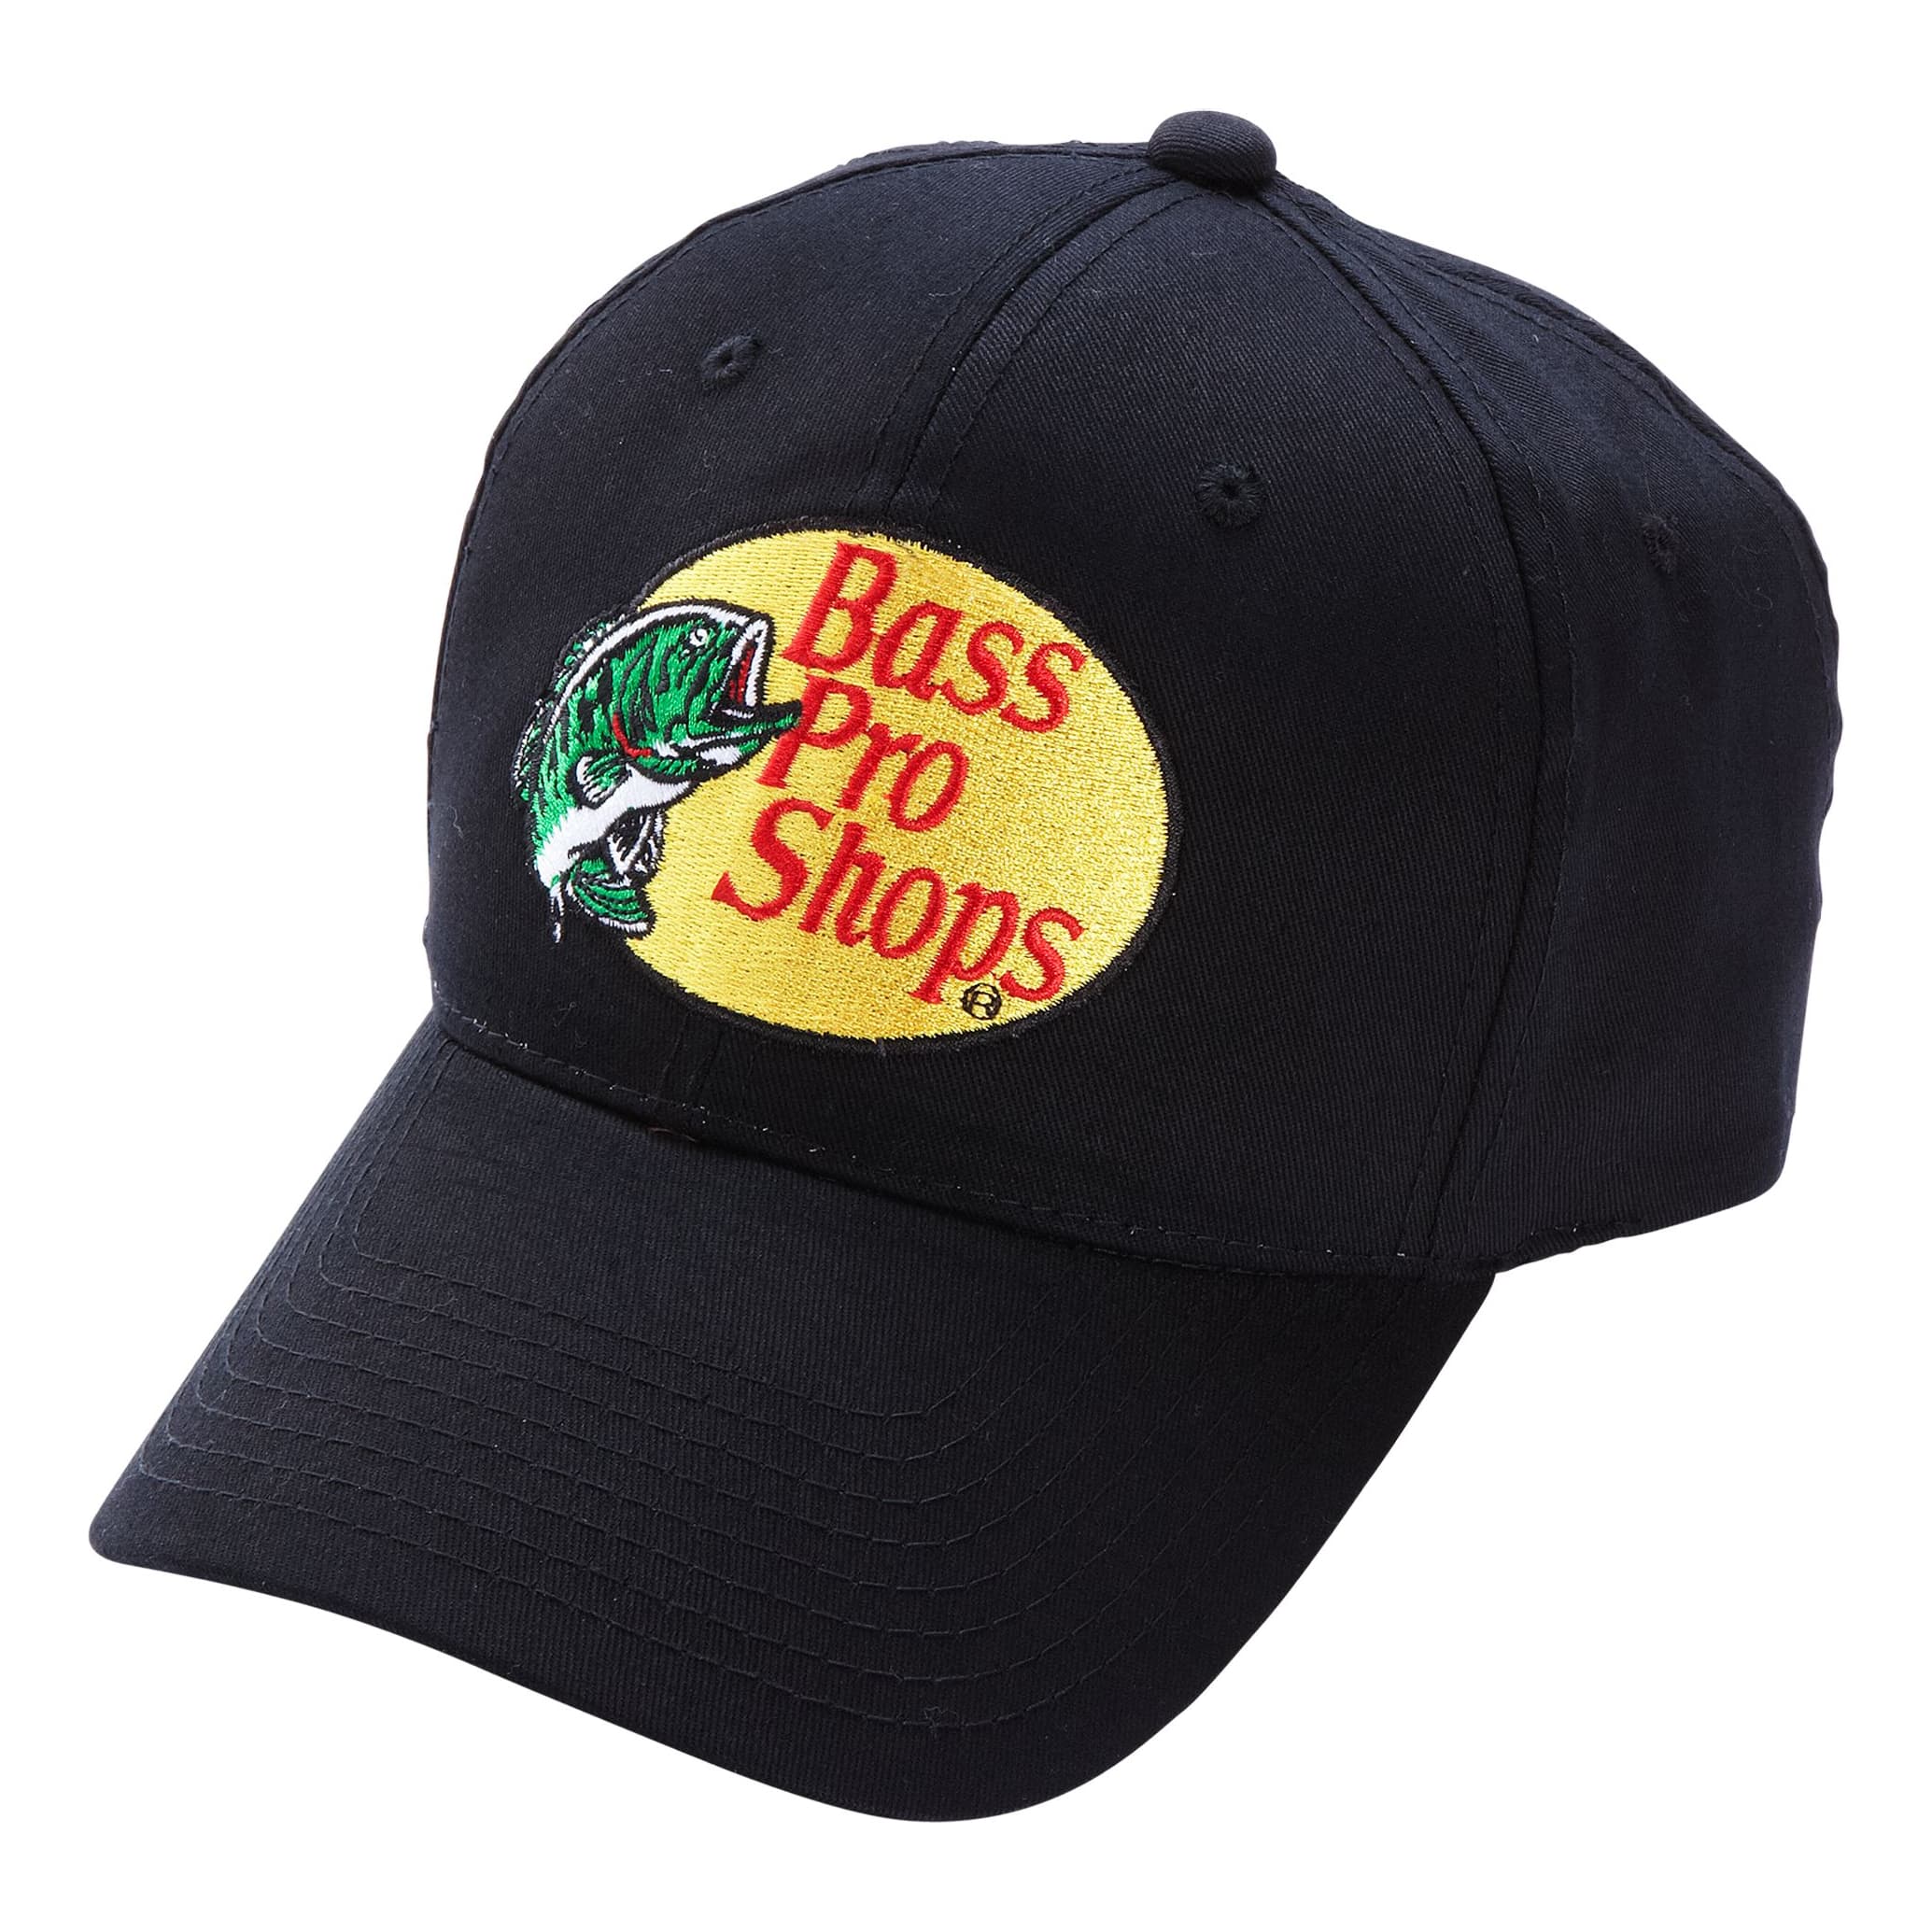 Bass Pro Shops Twill Caps Black